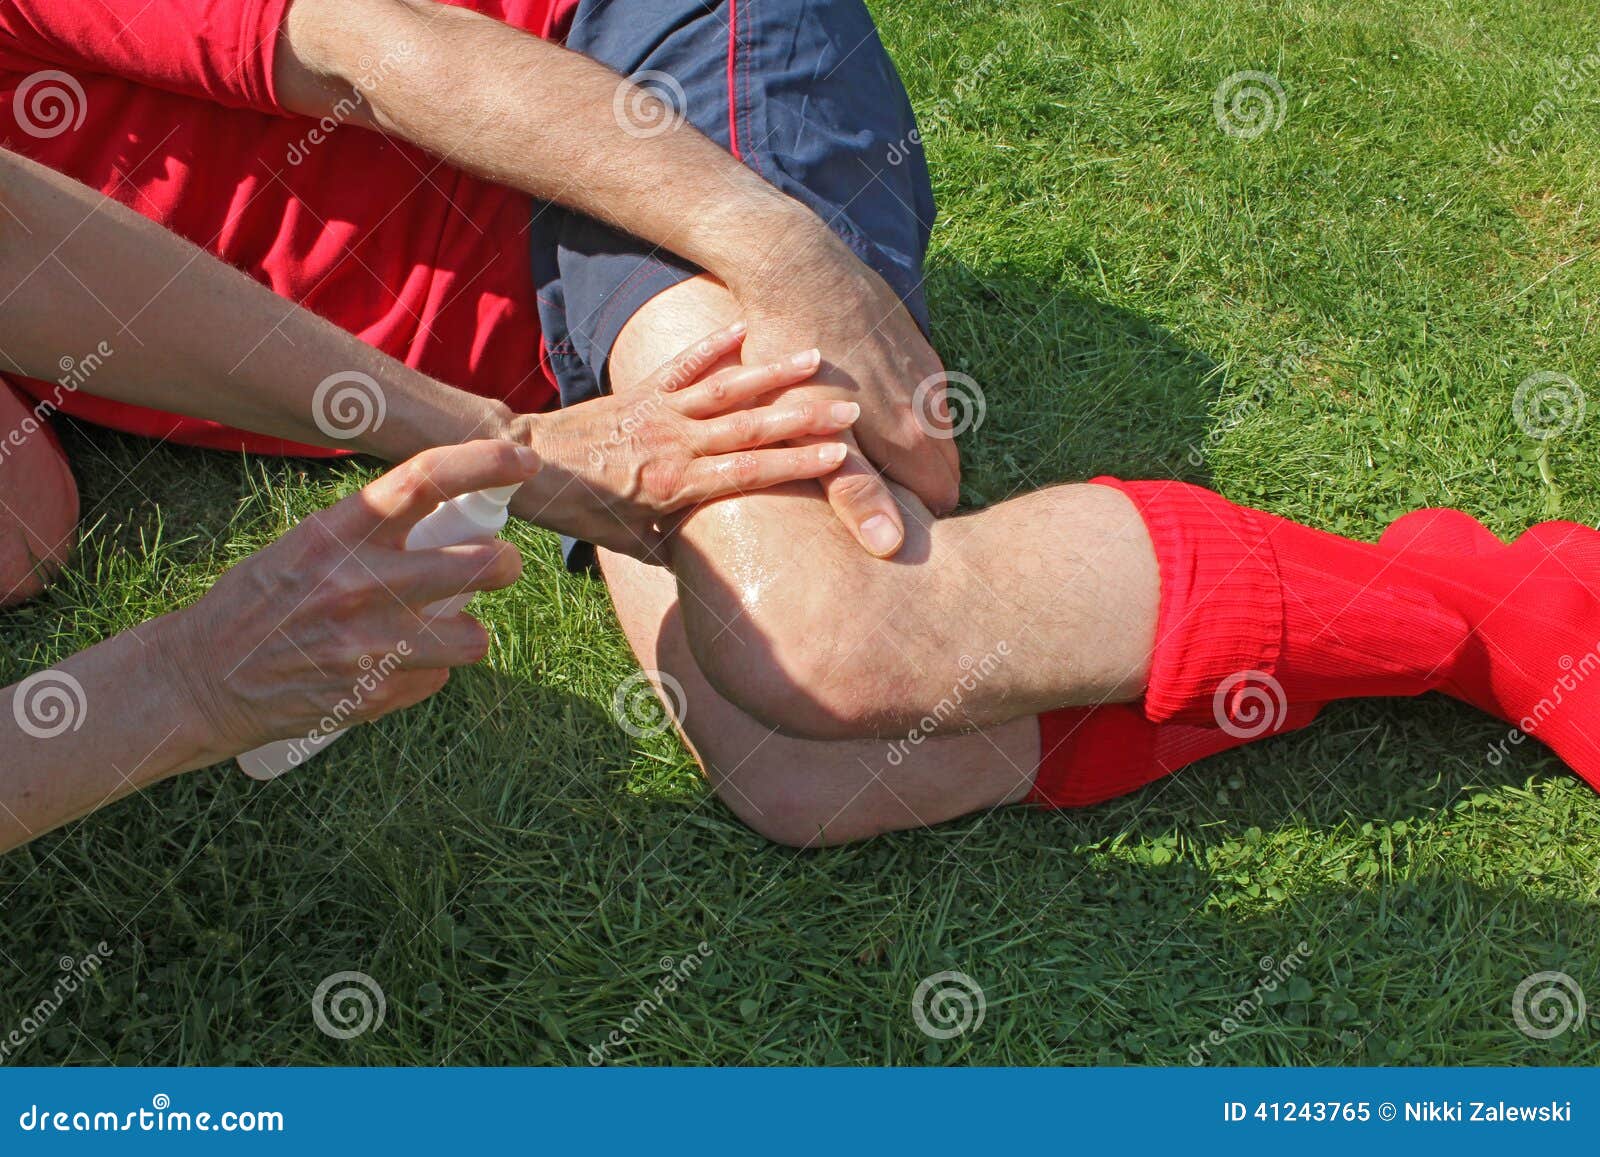 injured sportsman